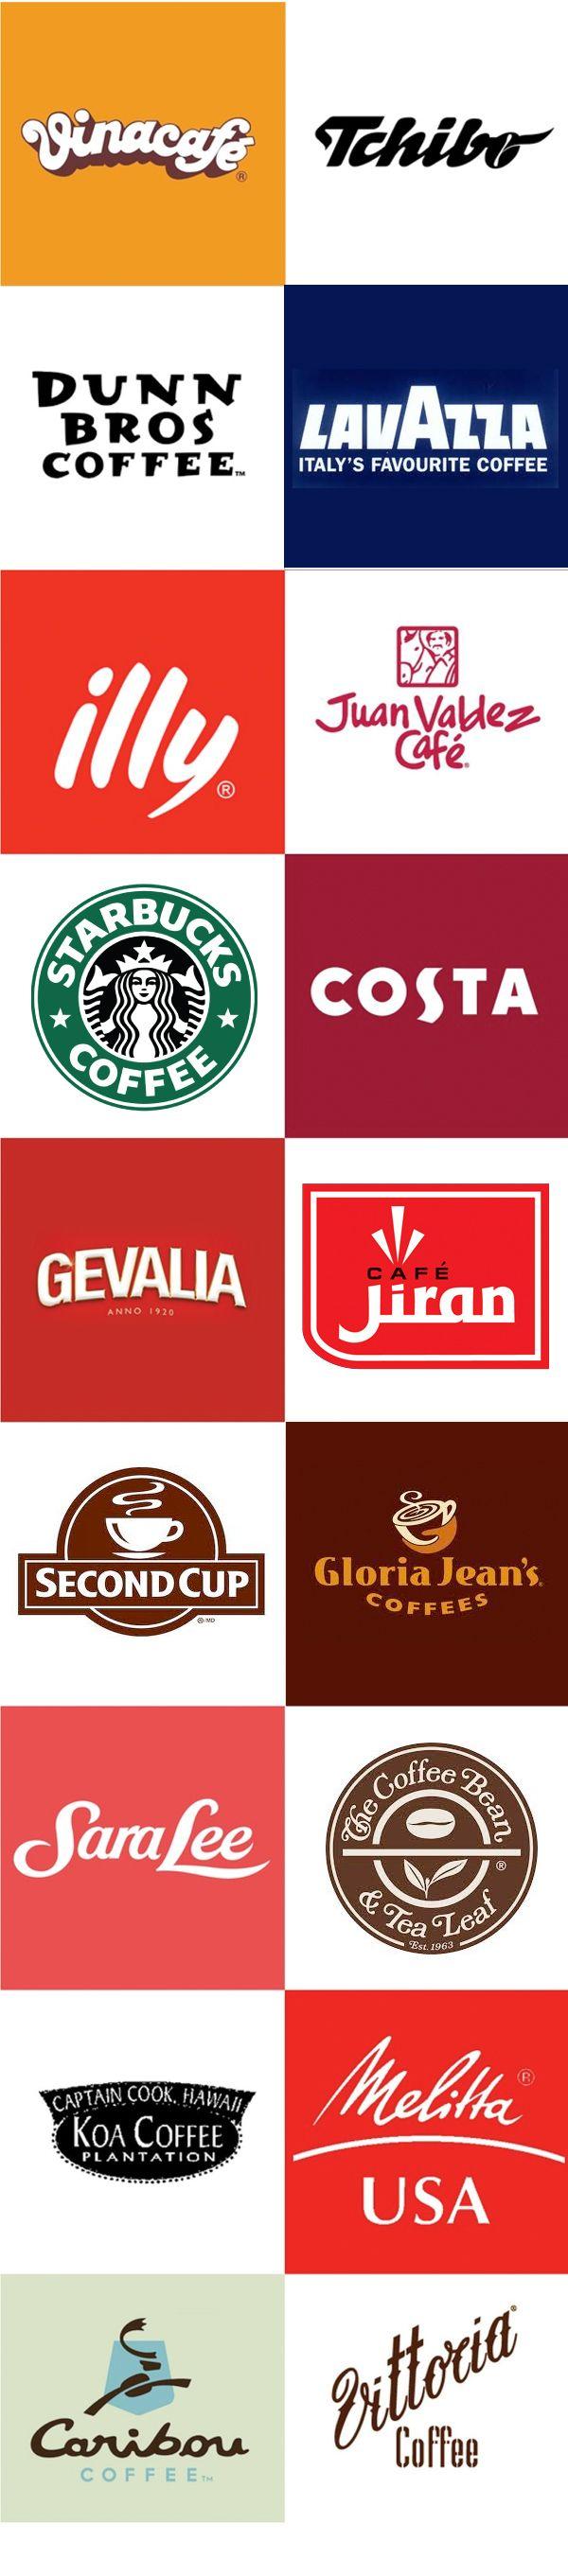 Coffee Brand Logo - Outstanding Coffee Brands | Caffeine Addict | Pinterest | Coffee ...